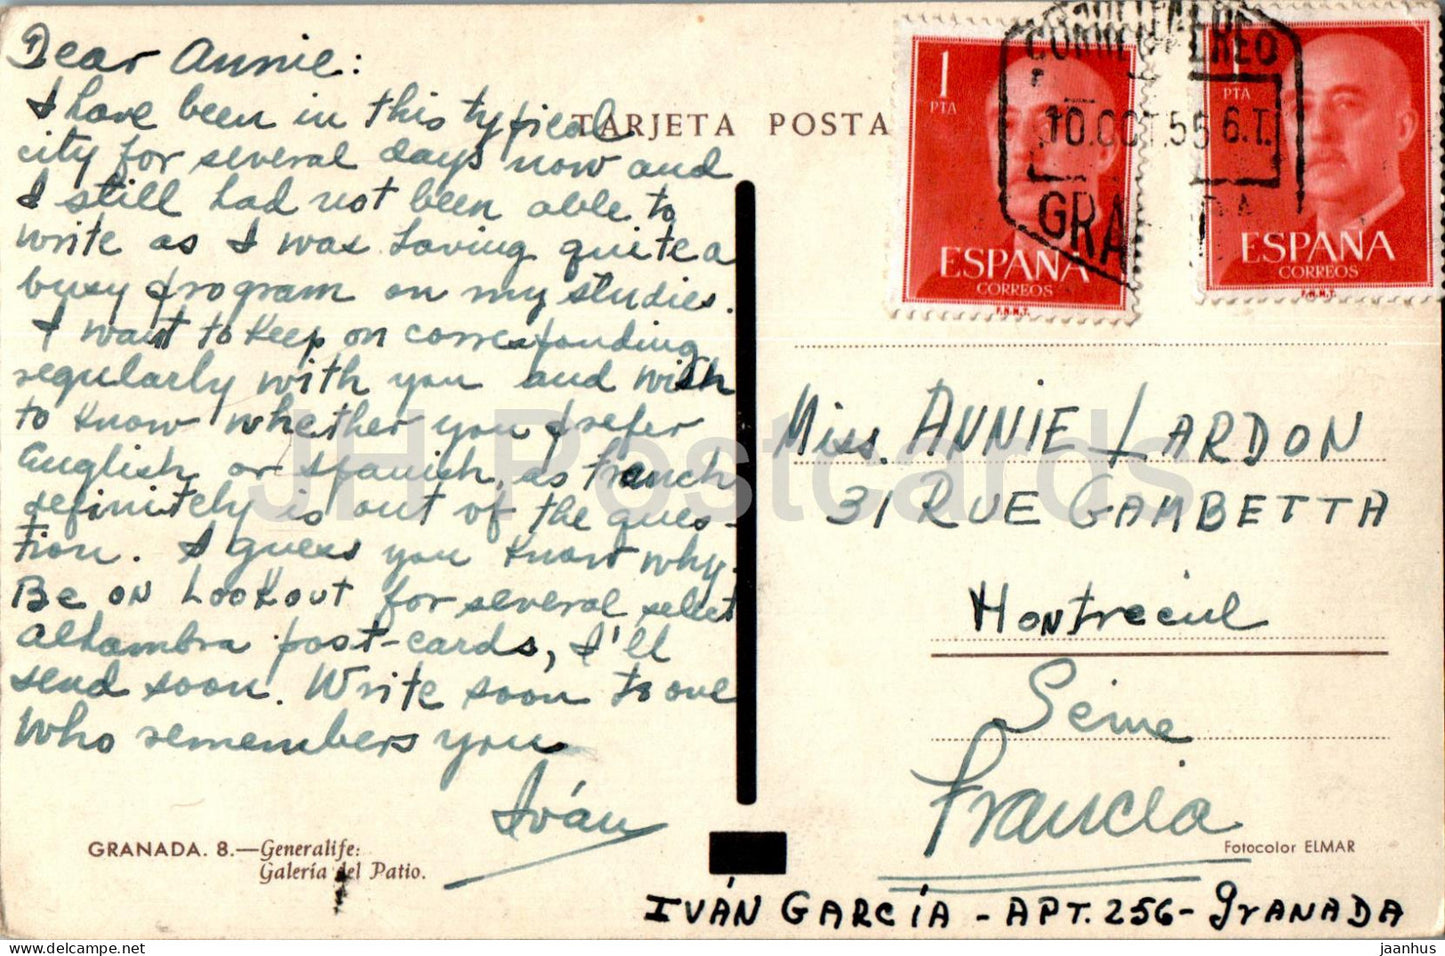 Granada – Generalife – Galeria del Patio – 8 – alte Postkarte – 1955 – Spanien – gebraucht 